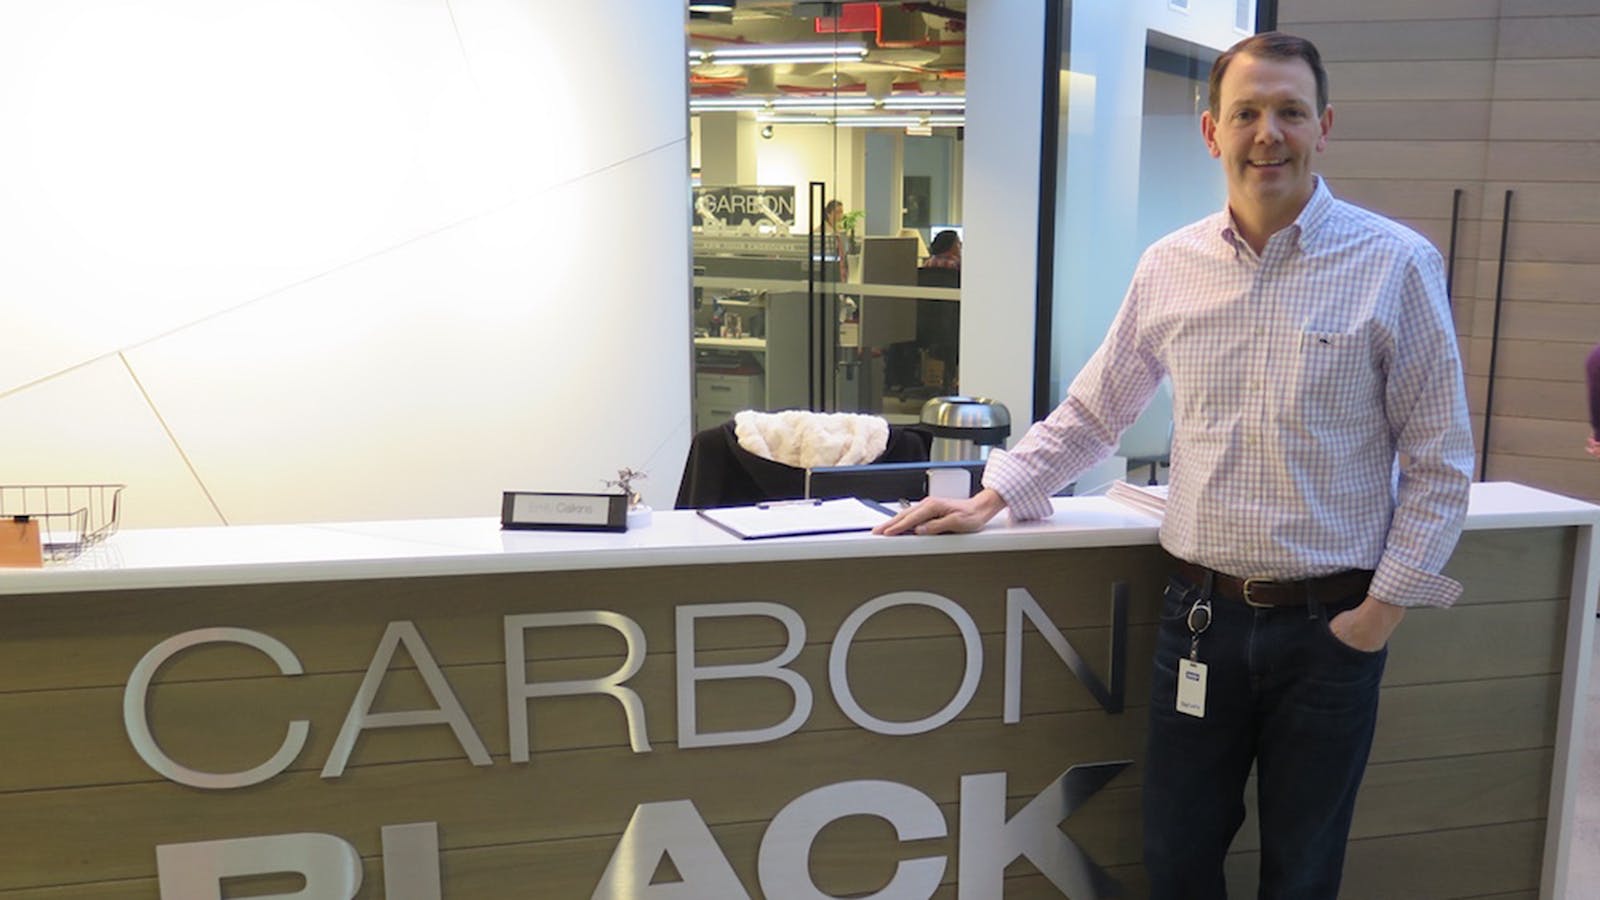 Carbon Black CEO Patrick Morley. Photo: Kyle Alspach for BostInno